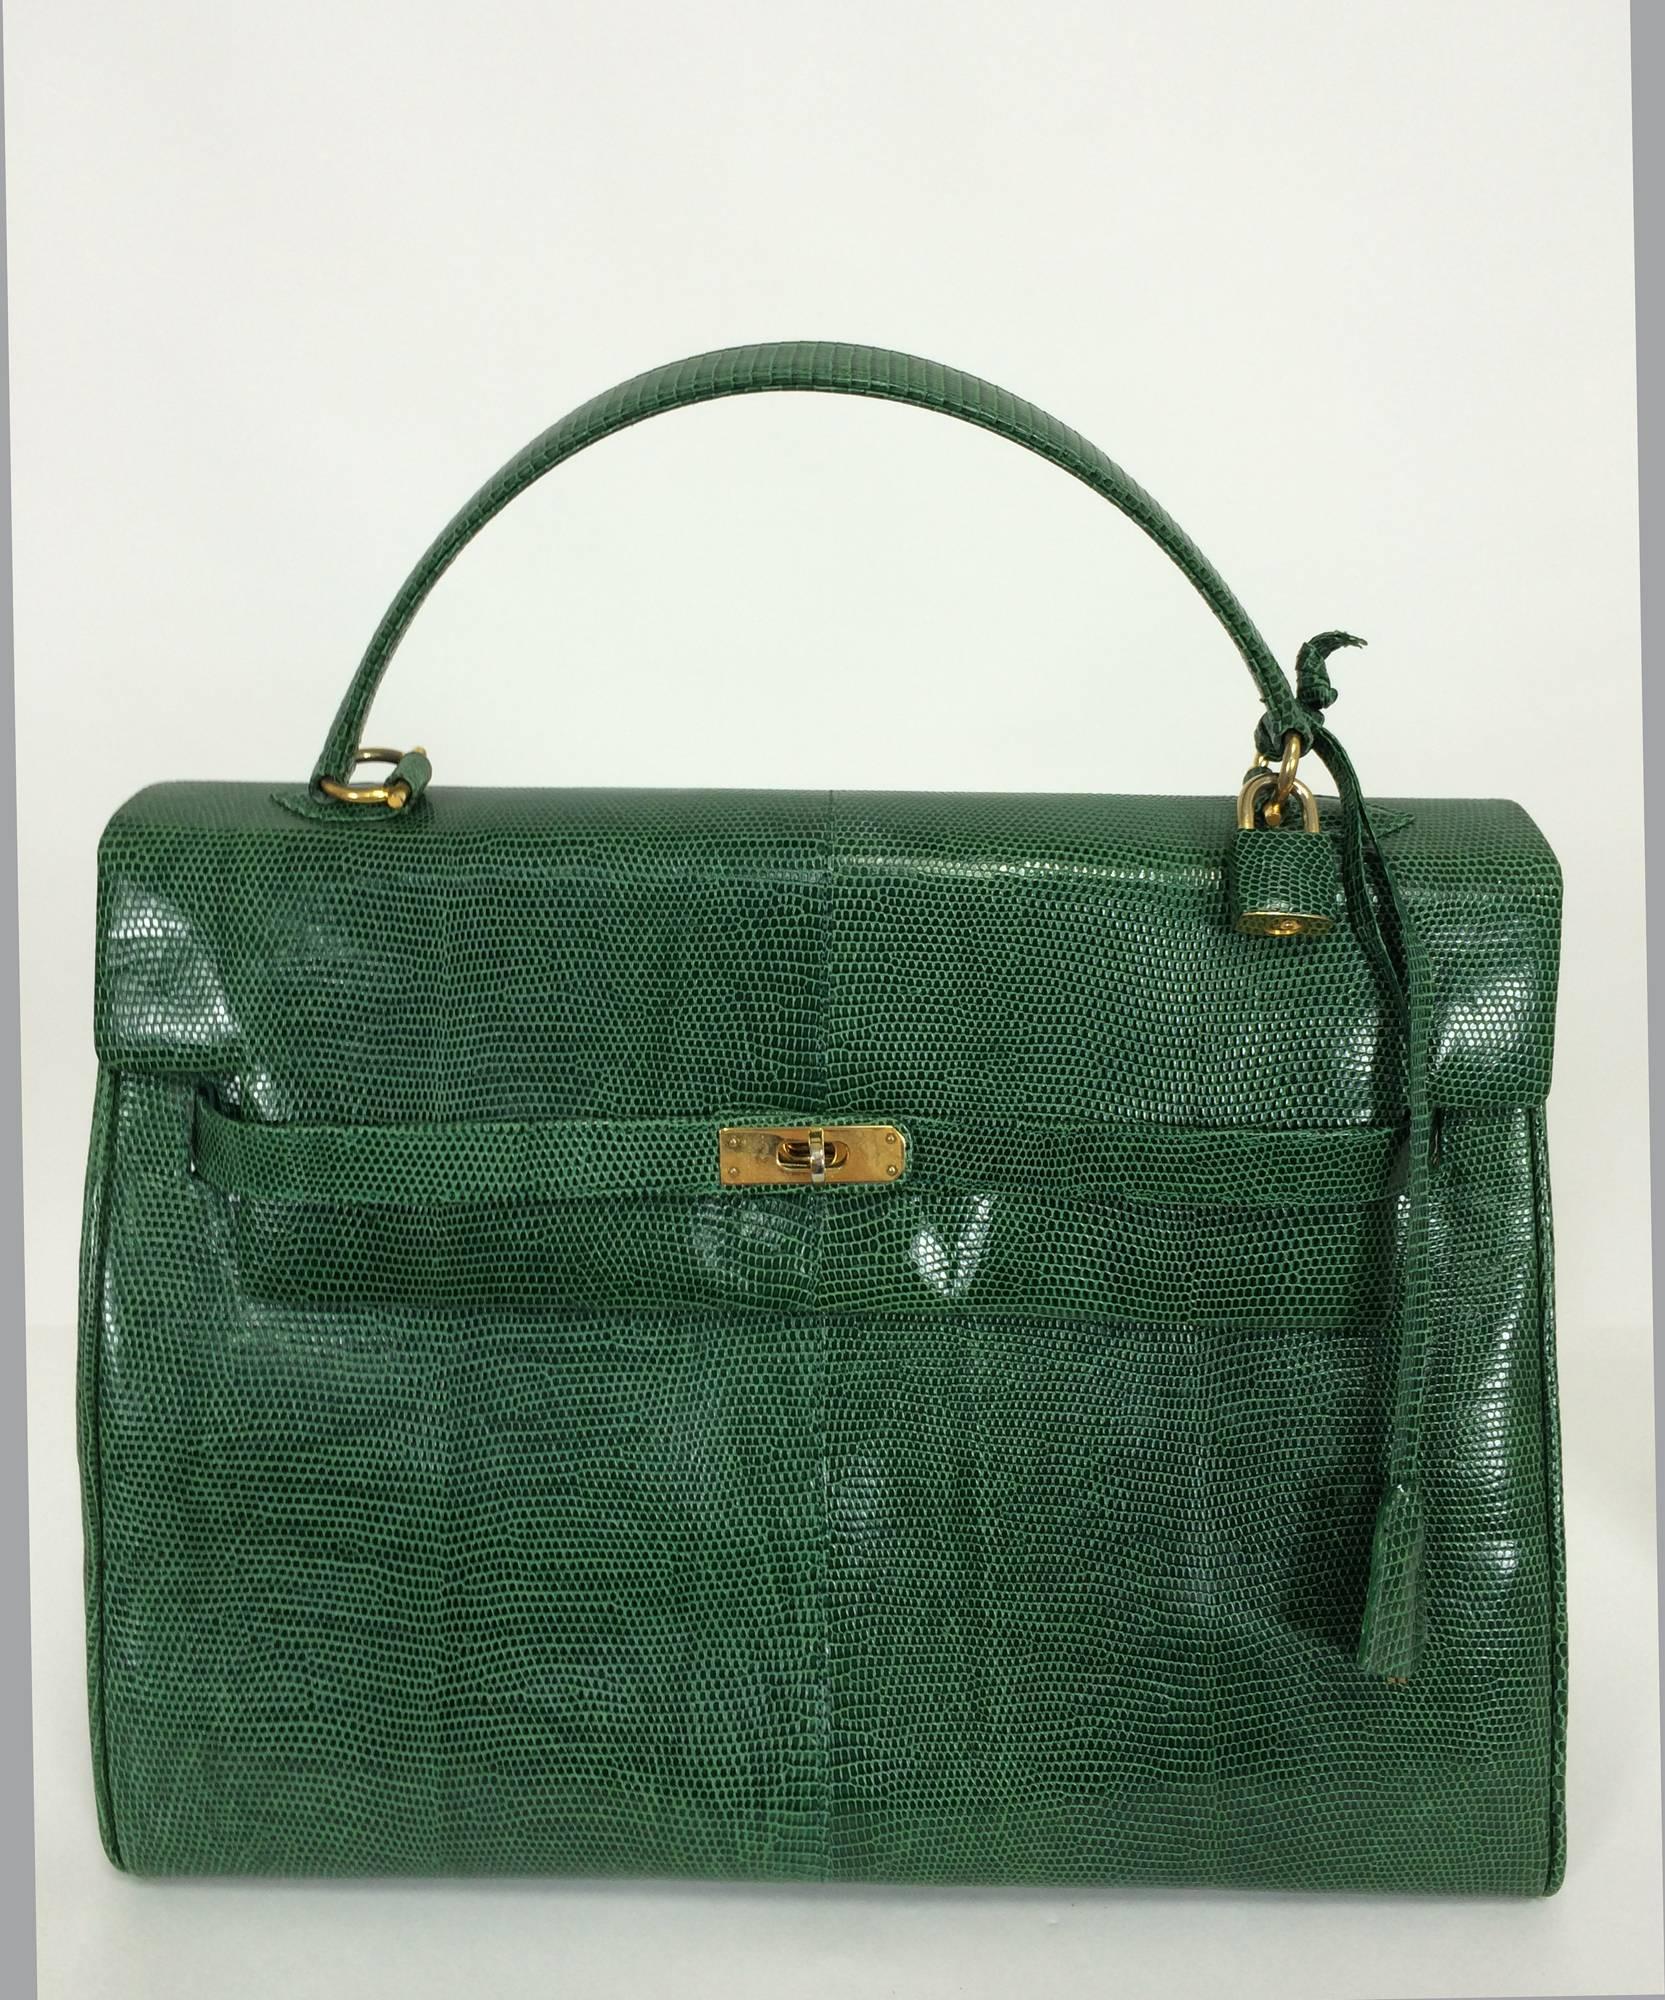 Luc Benoit green glazed lizard Kelly style handbag gold hardware 1990s 4